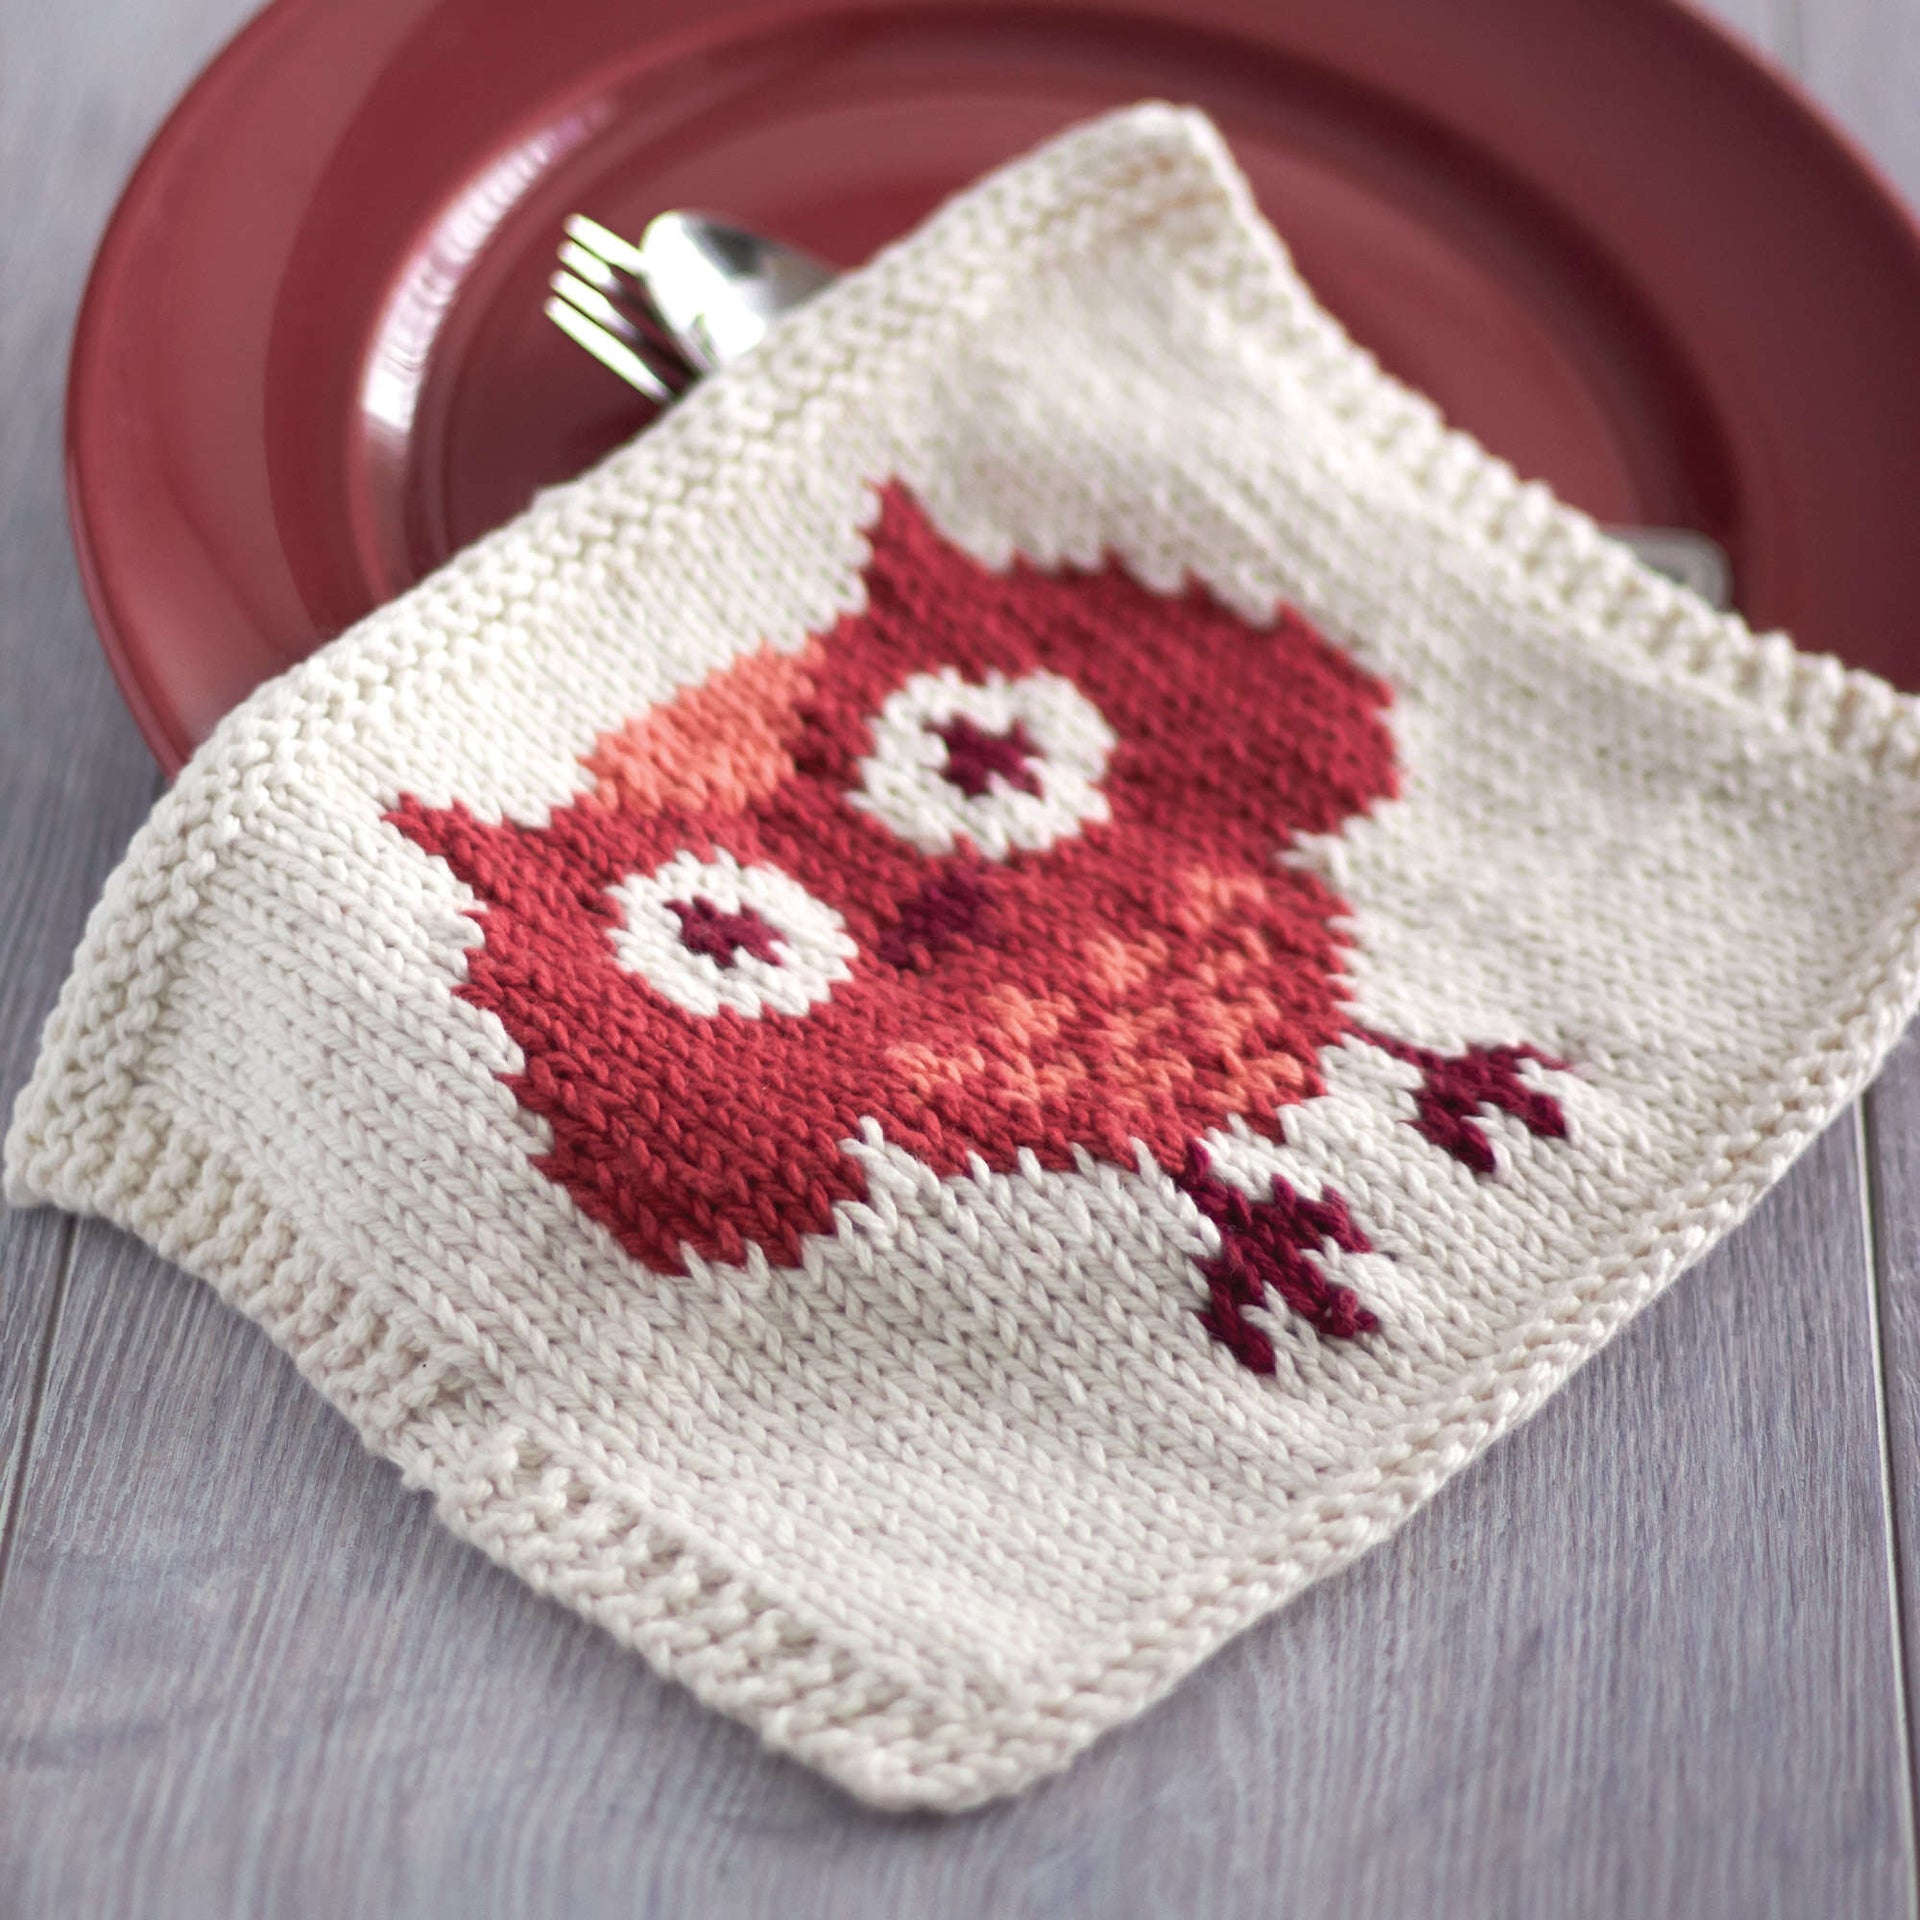 KnitOwl: dishcloth yarn comparison sugar and creme vs sugarwheel